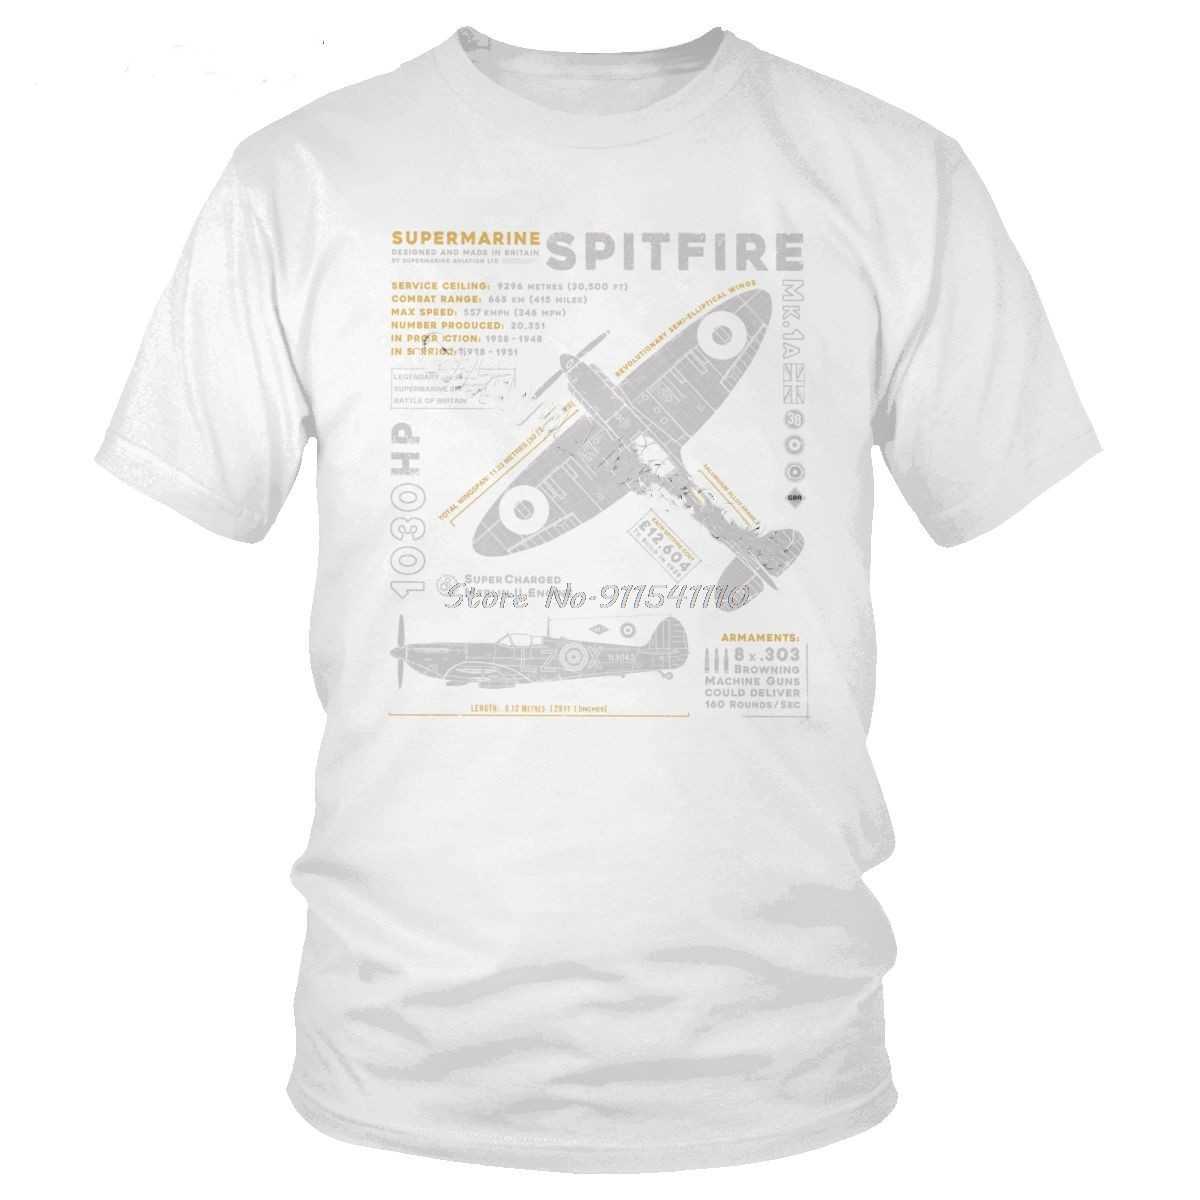 Men's T-Shirts Vintage Supermarine Spitfire MK 1 T Shirt Men Cotton Tee Short Sleeve Fighter Plane WW2 War Pilot Aircraft Airplane T-Shirt Gift W0322